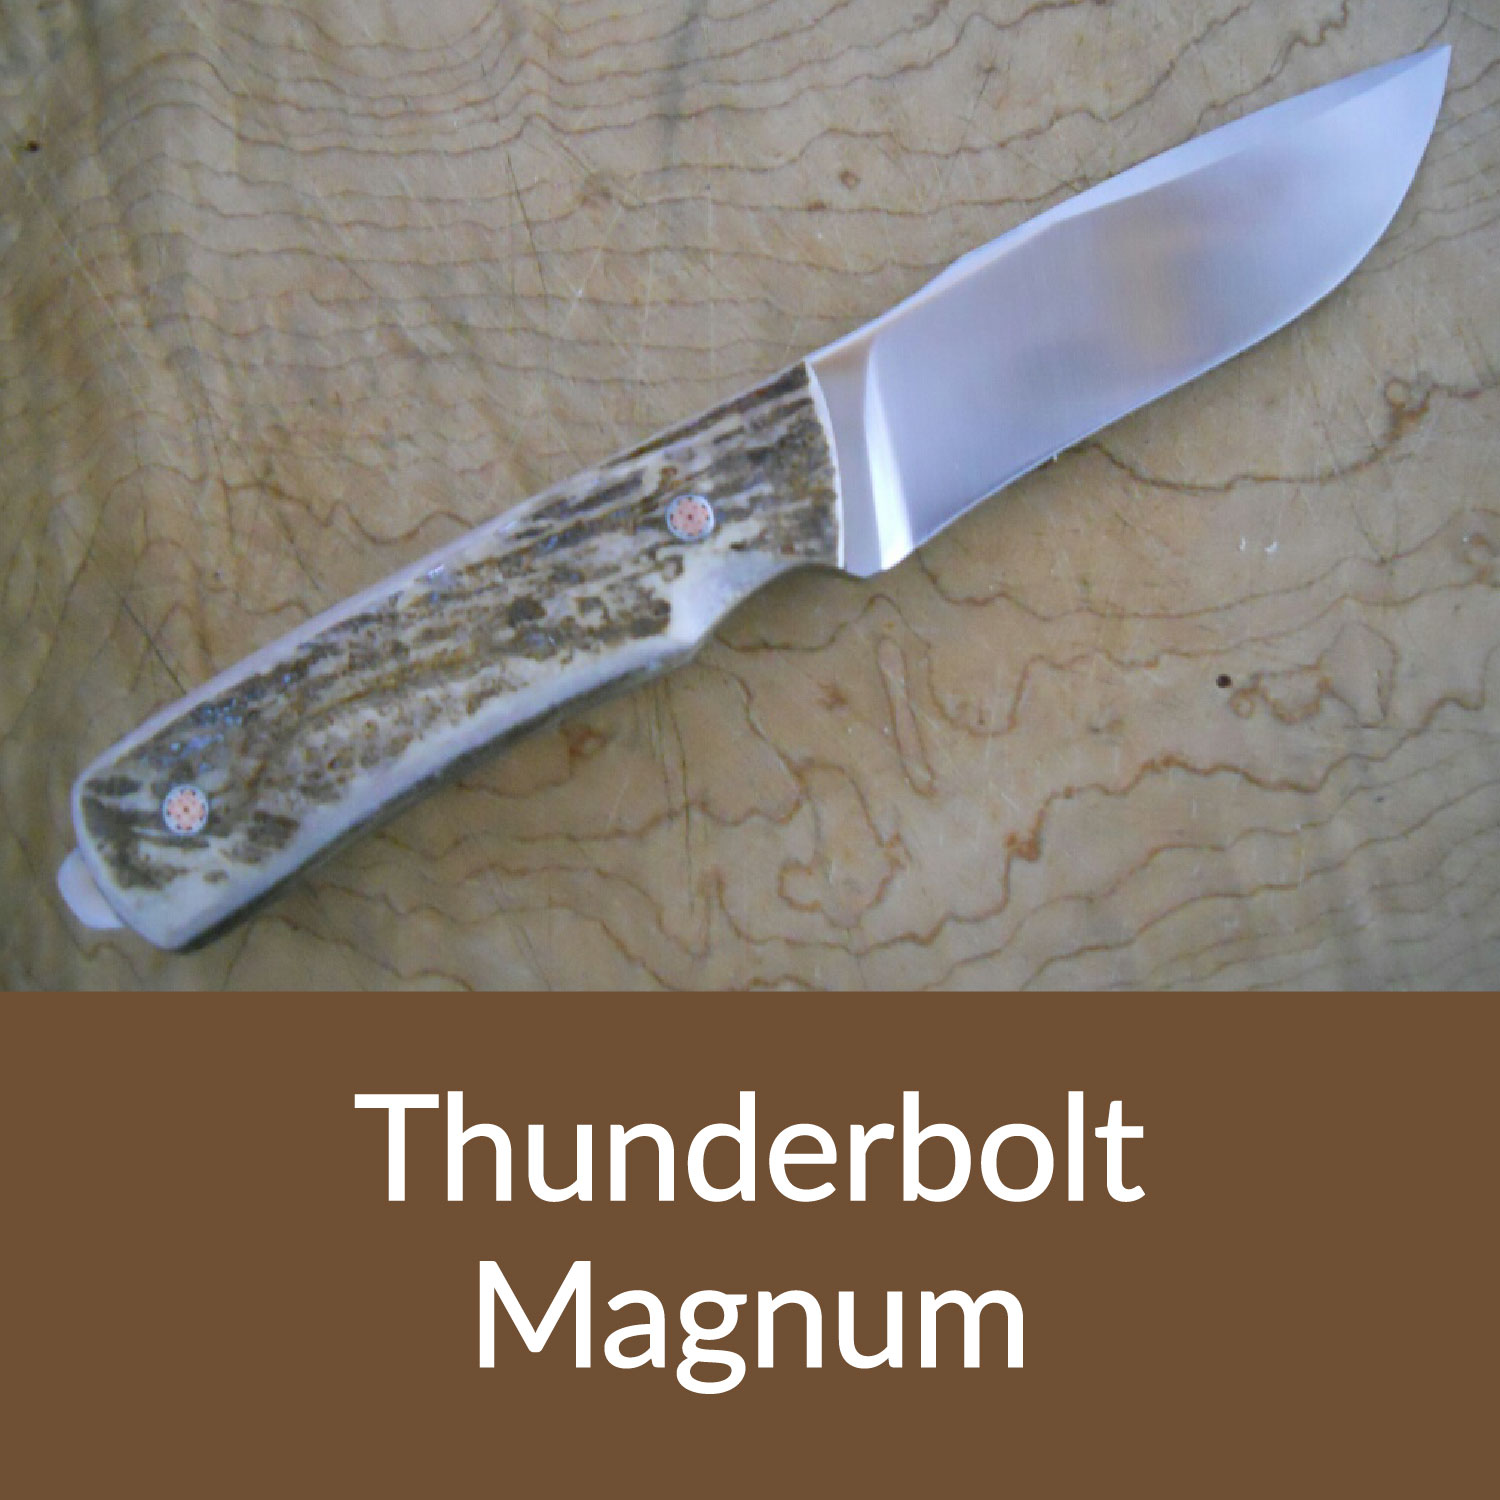 Thunderbolt Magnum